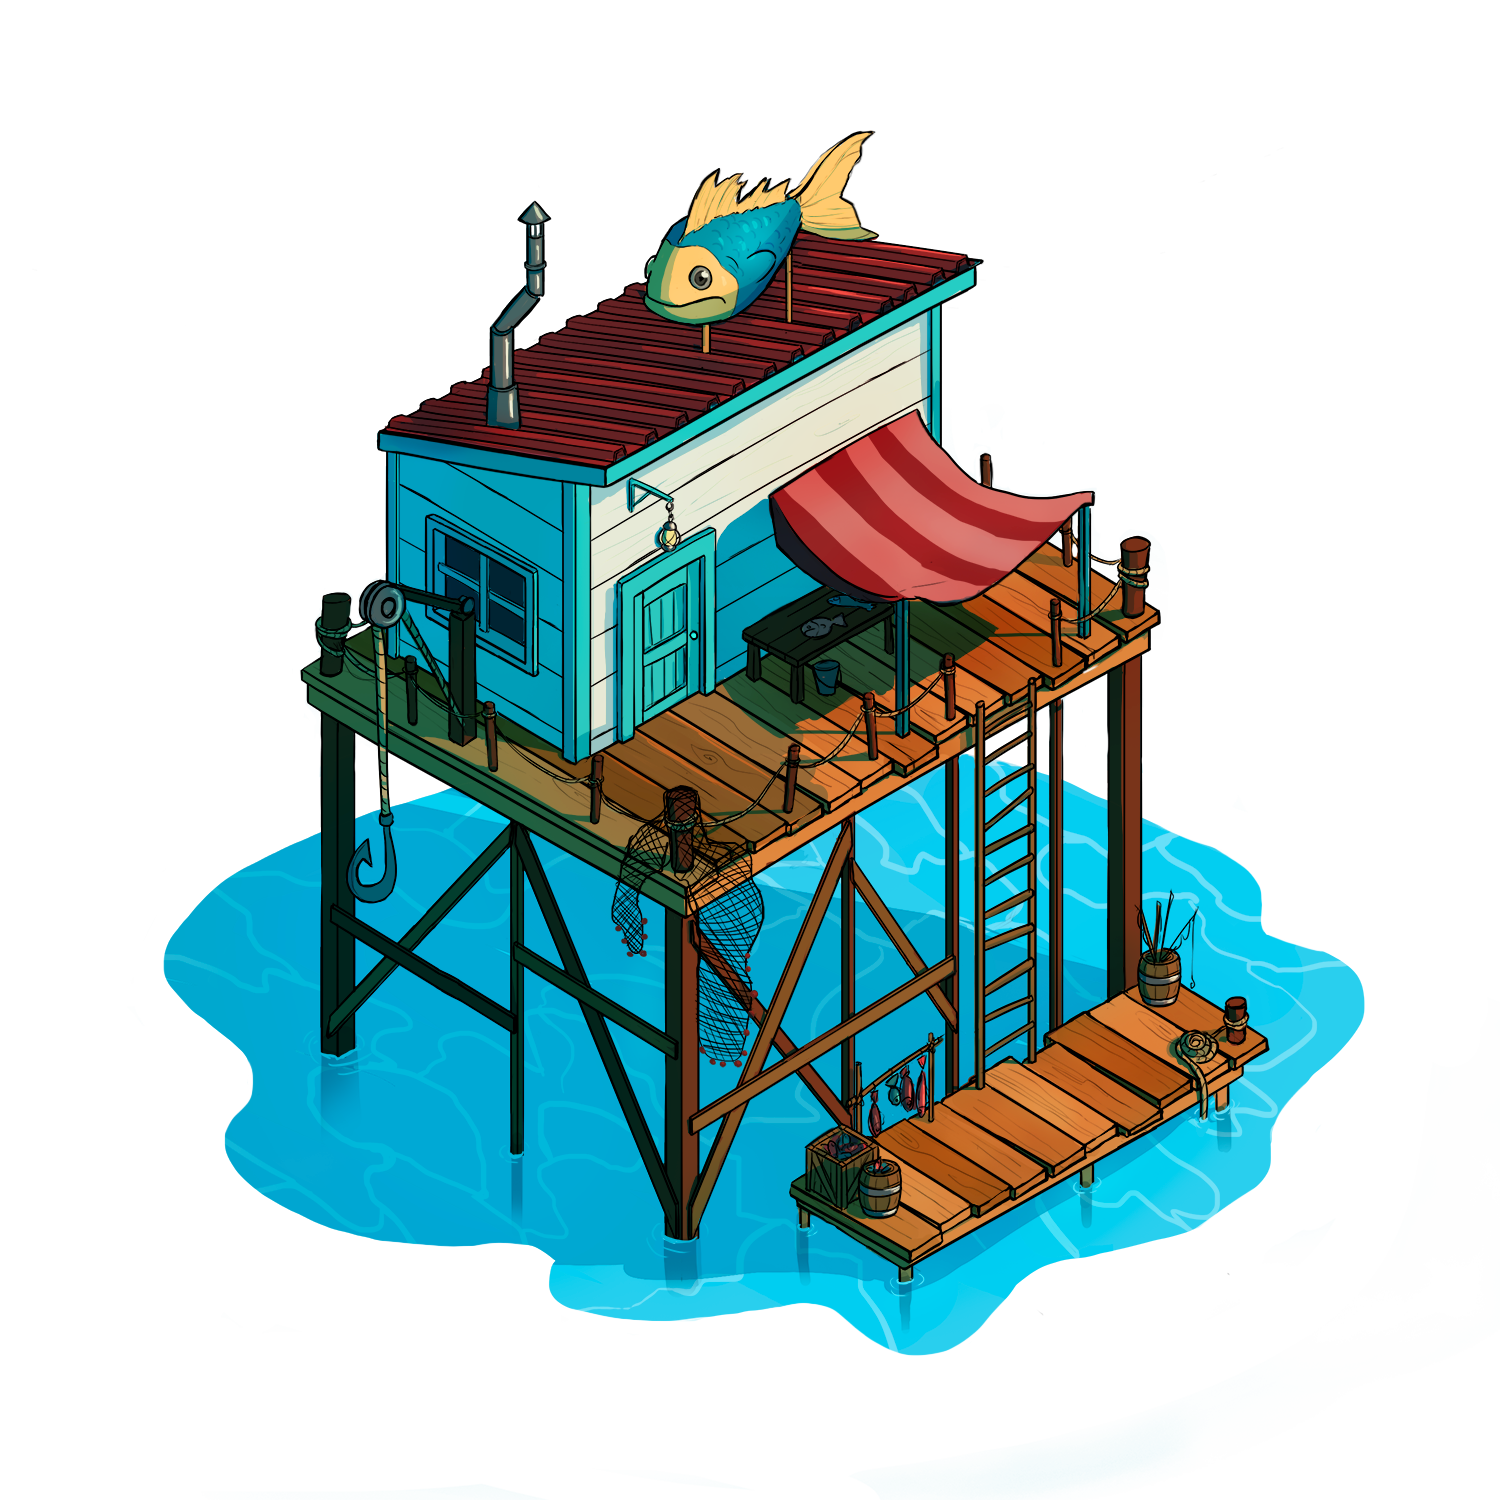 Cabane de pêche